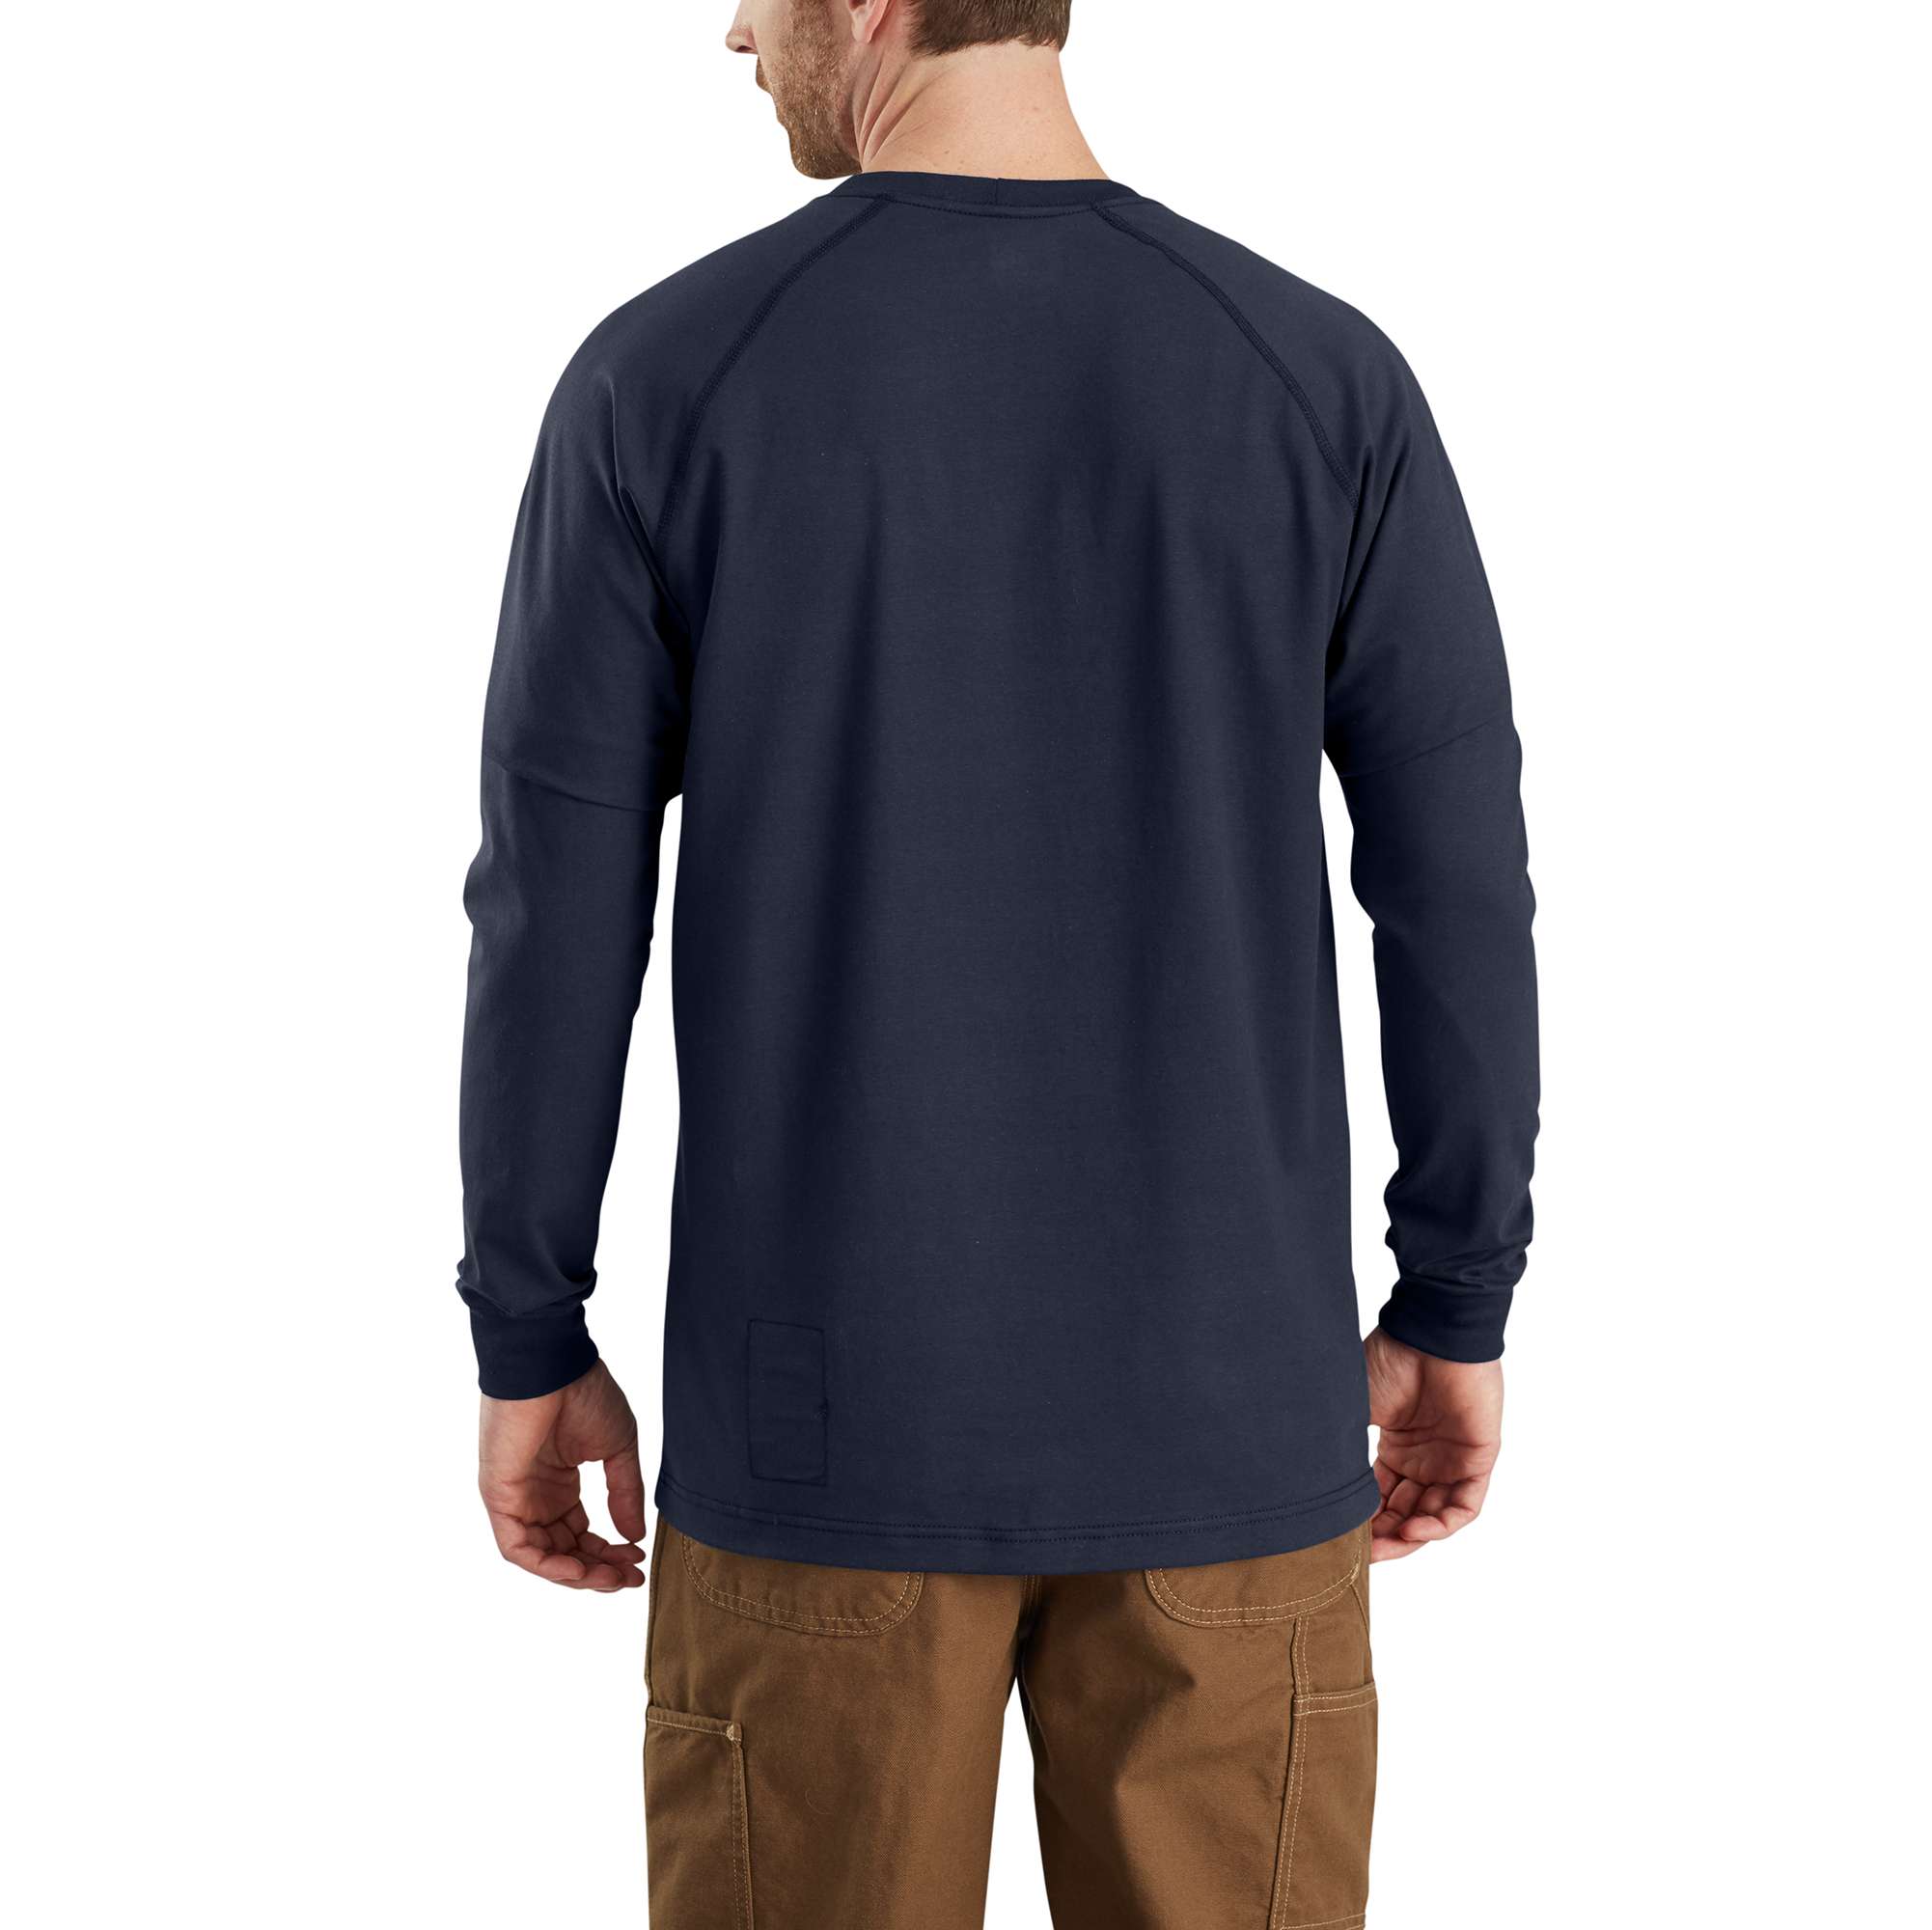 Carhartt Men's Flame-Resistant Force Original Fit Long-Sleeve Graphic T-Shirt, 104130-020, Granite Heather